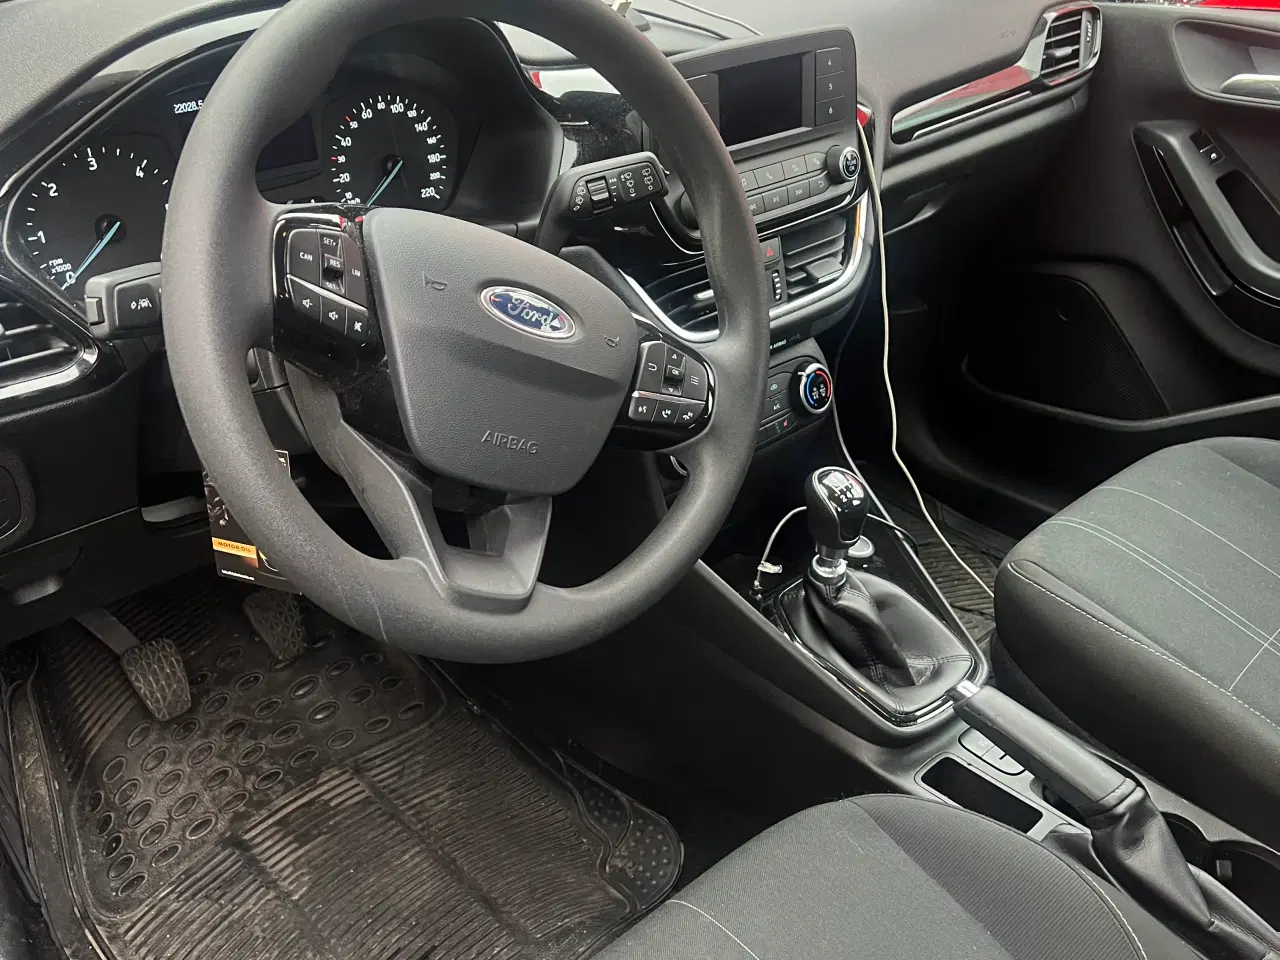 Billede 4 - Nyer Ford Fiesta 2018 kun 30.000 km